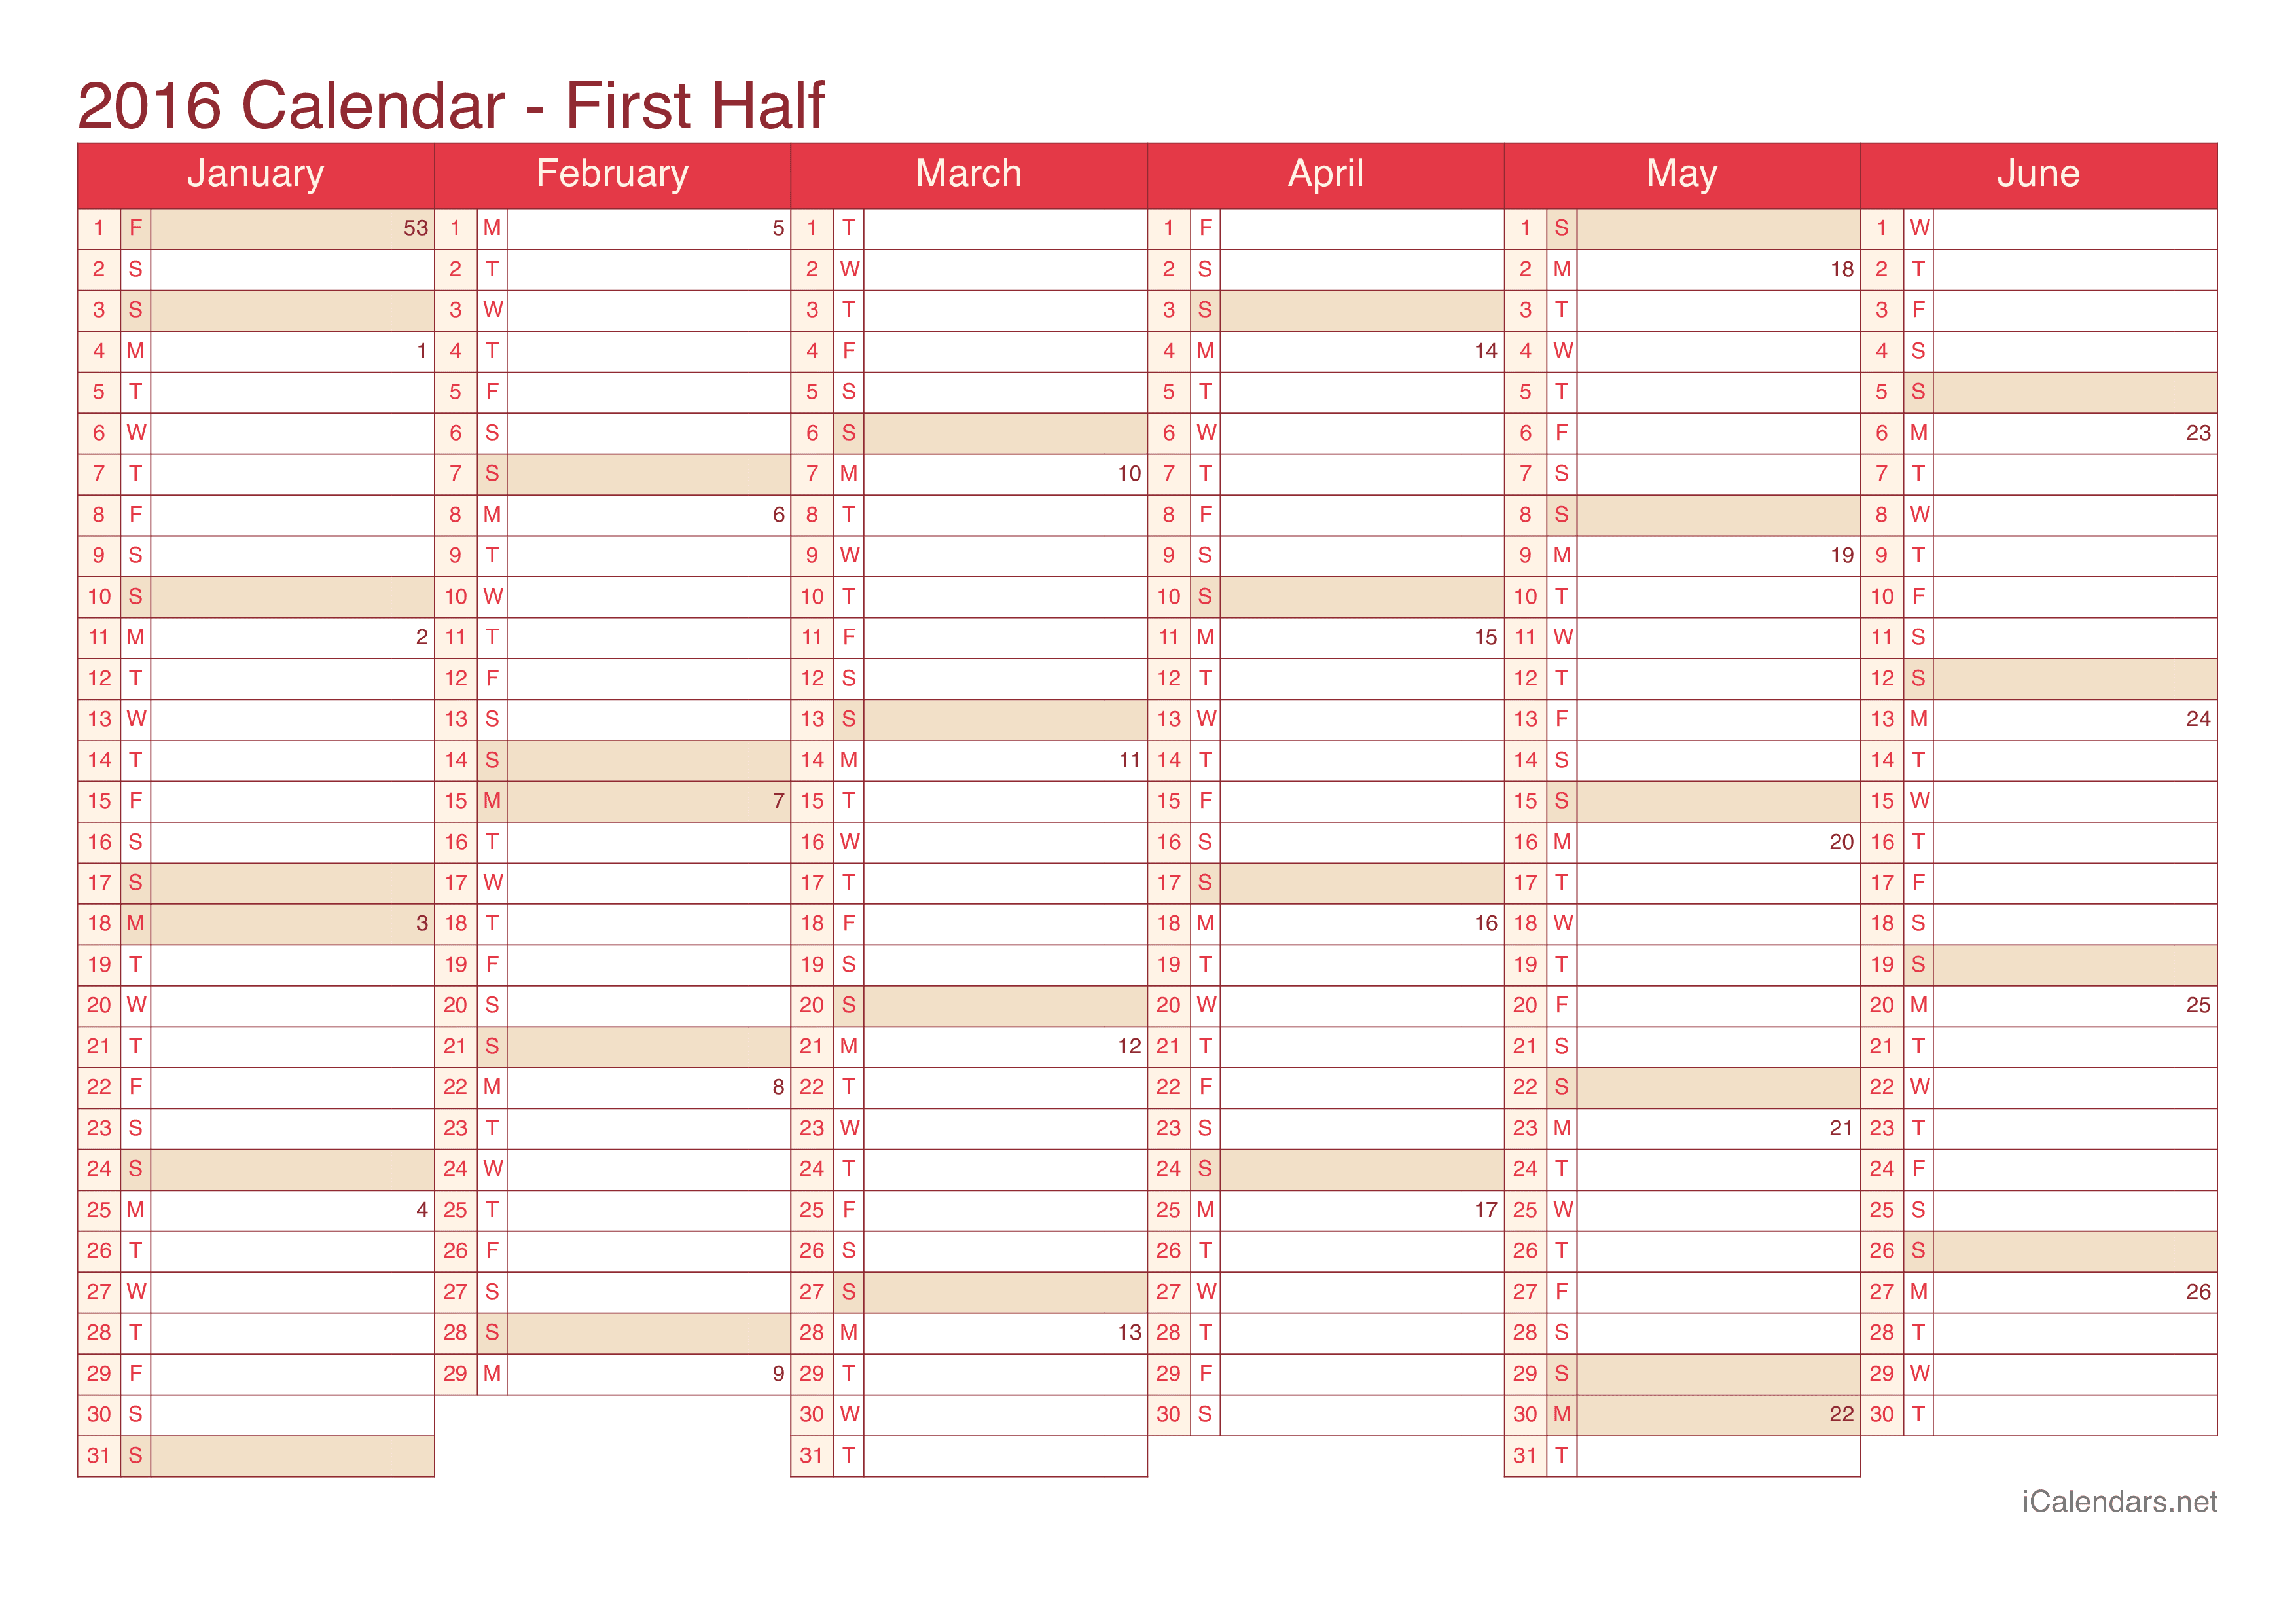 2016 Half year calendar with week numbers - Cherry